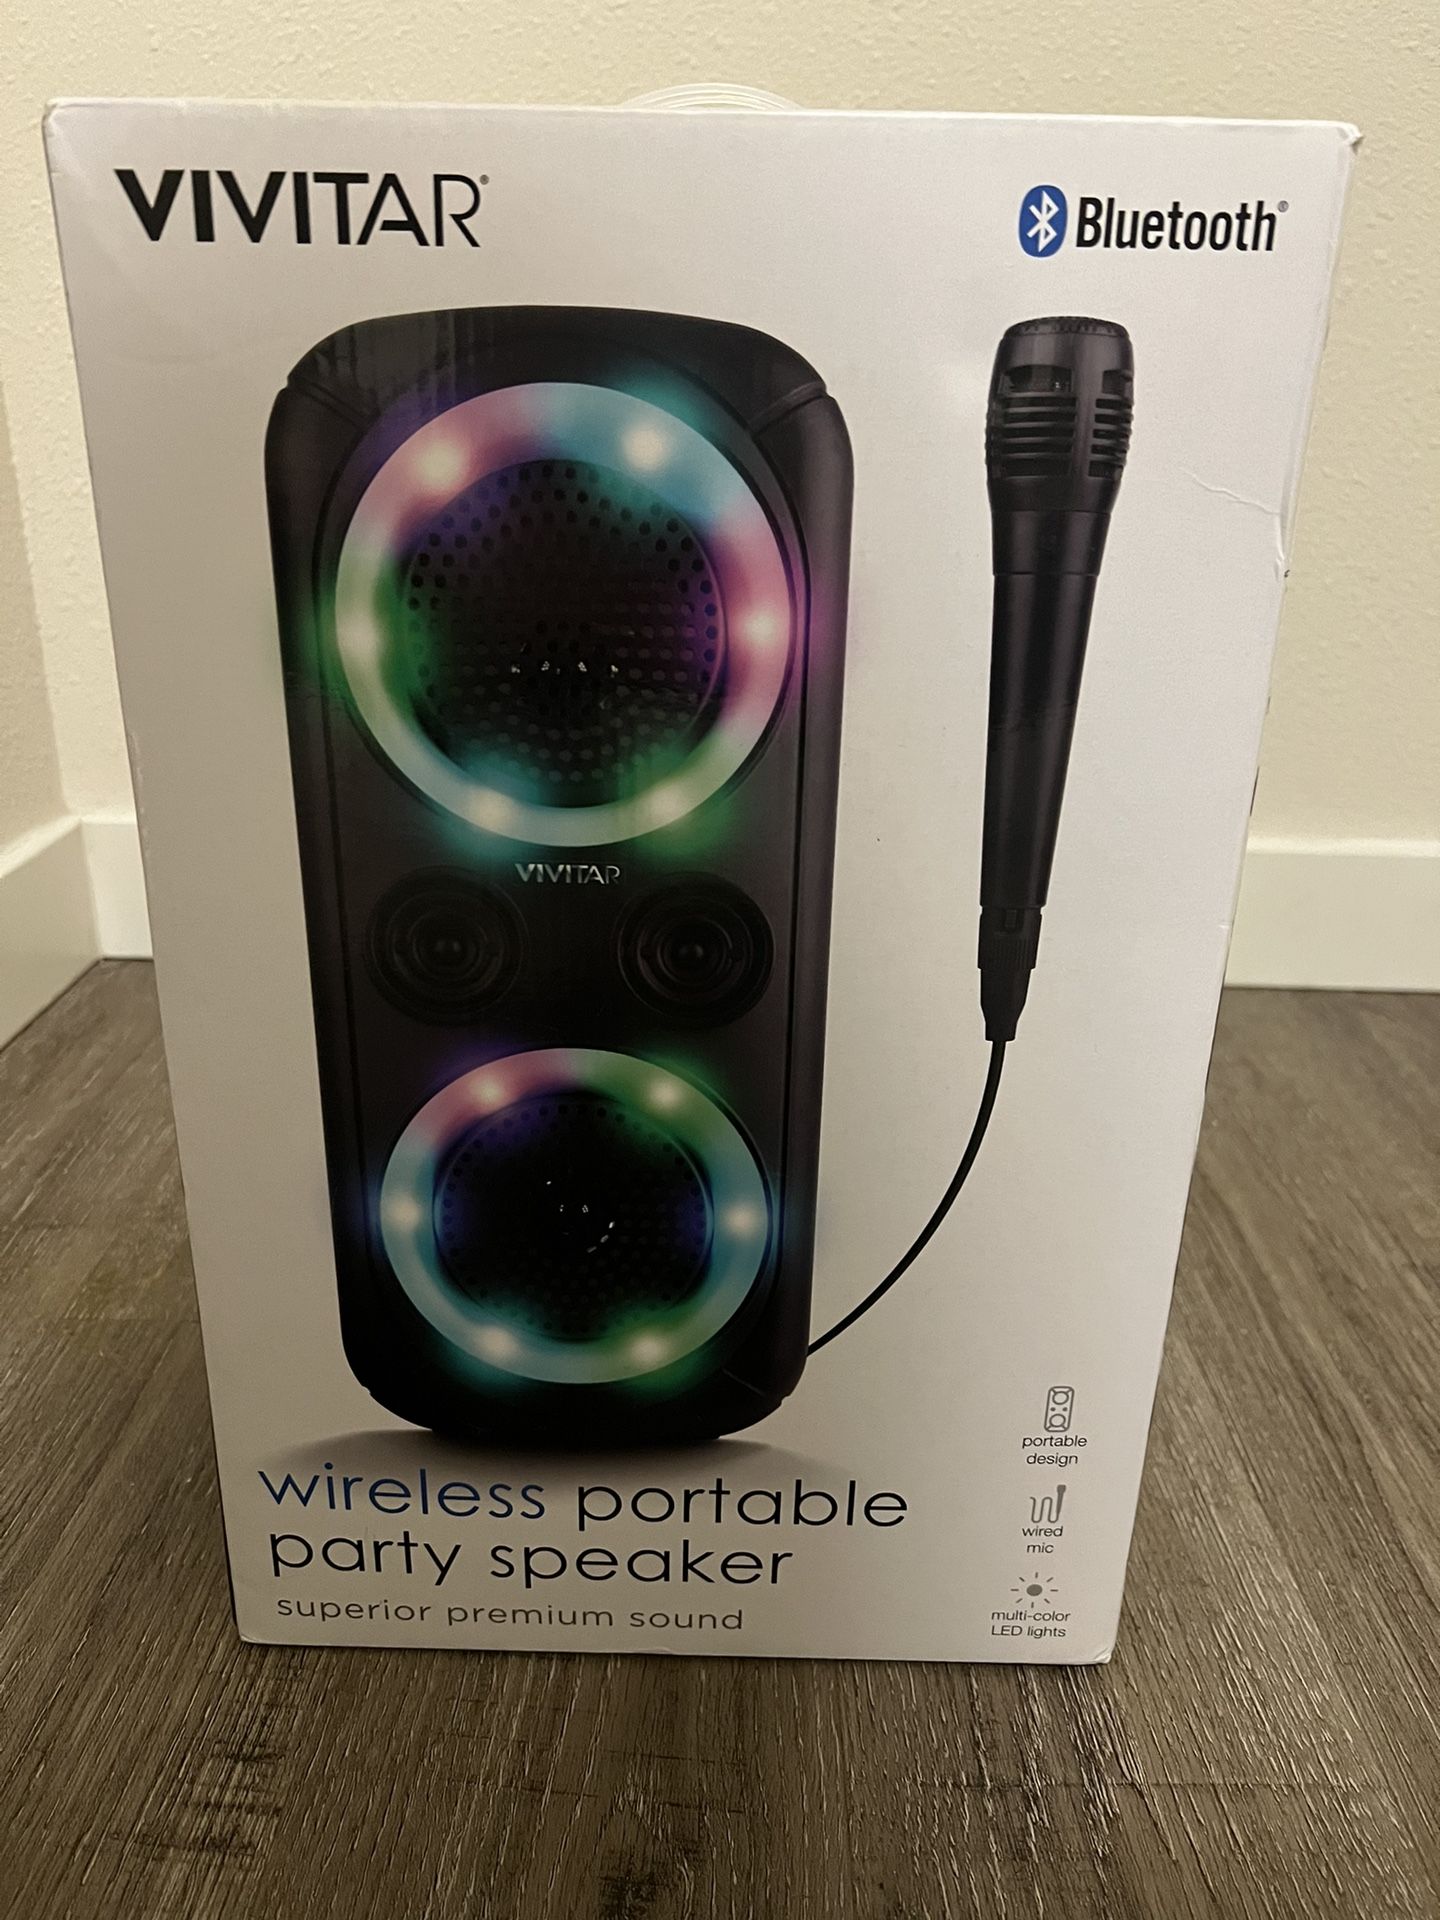 Vivitar Wireless Portable Party Speaker - Superior Premium Sound